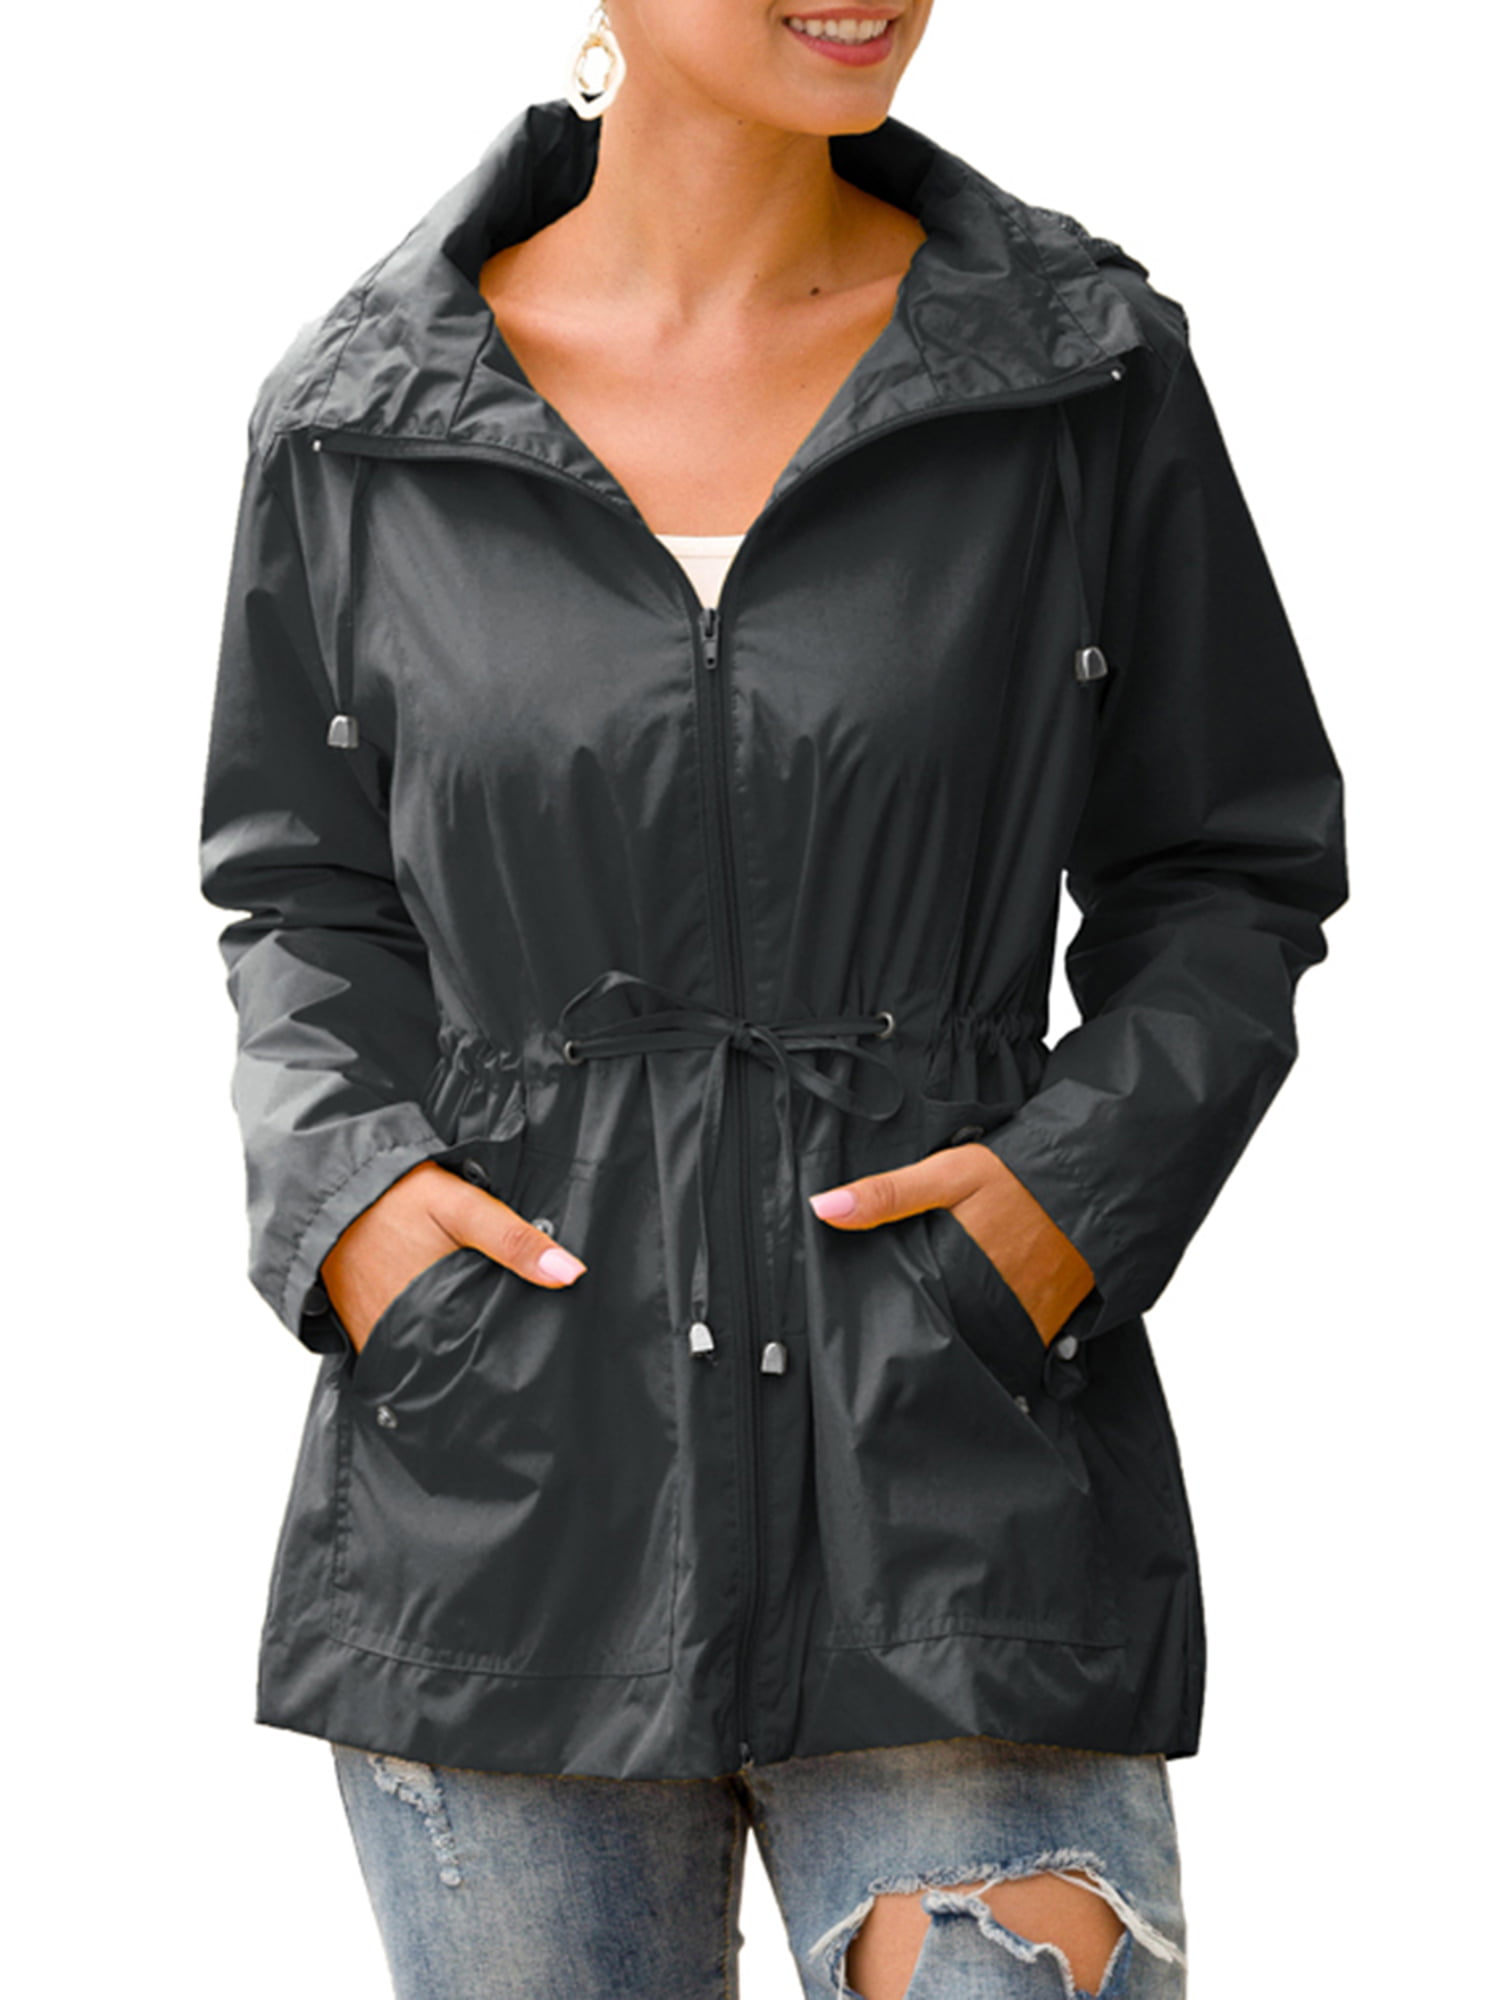 Selfieee - Selfieee Women's Raincoat for Women Waterproof Hooded Rain